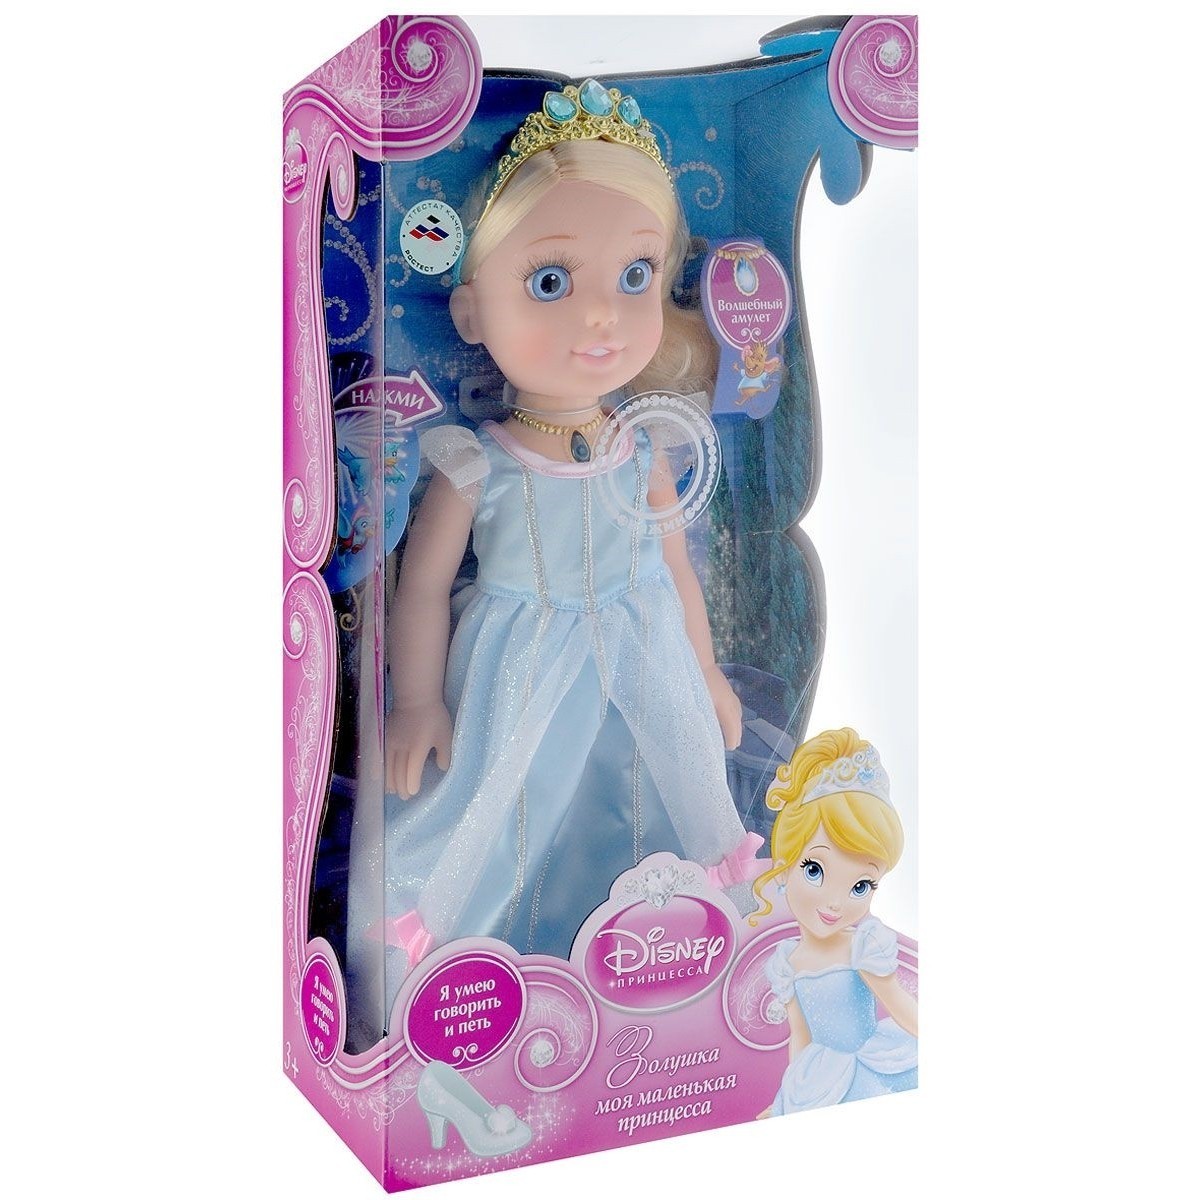 Принцесса малышка s класса. Кукла маленькая принцесса. Пупсы маленькие принцессы. Большая кукла принцесса. Карапуз кукла Золушка поющая.